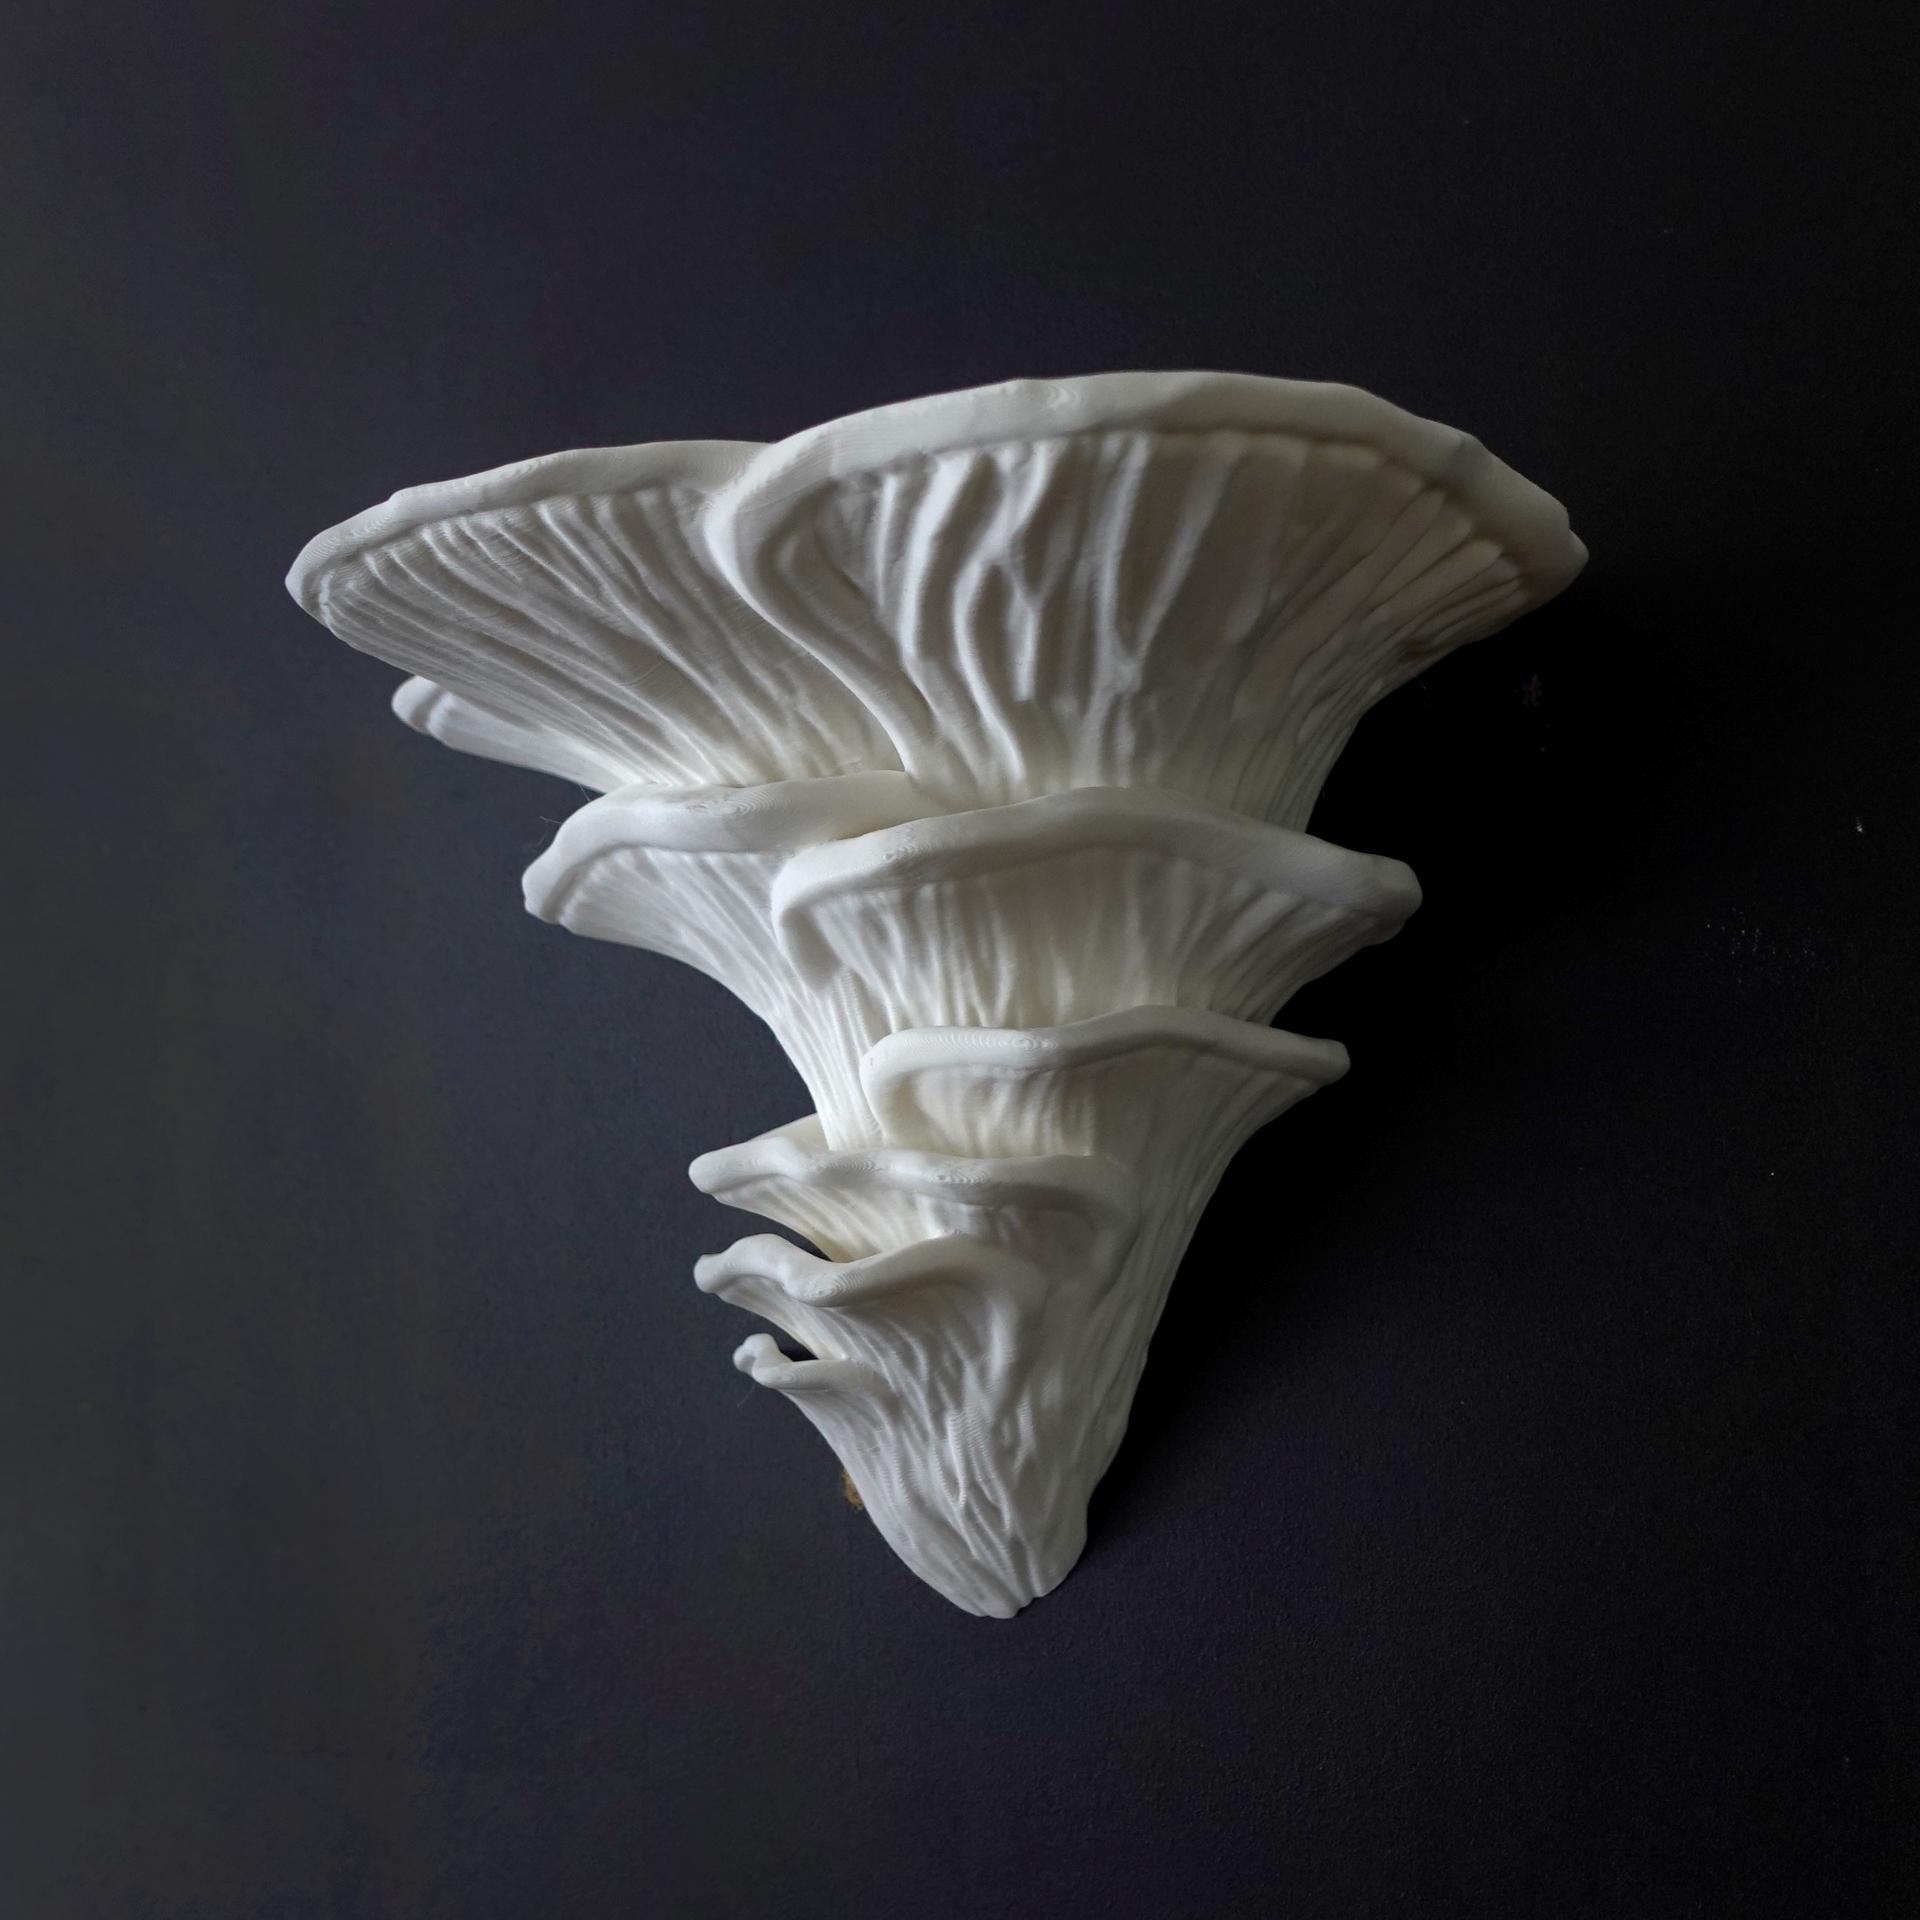 Mushroom shelf “Pleurotus Djamor” 3d model